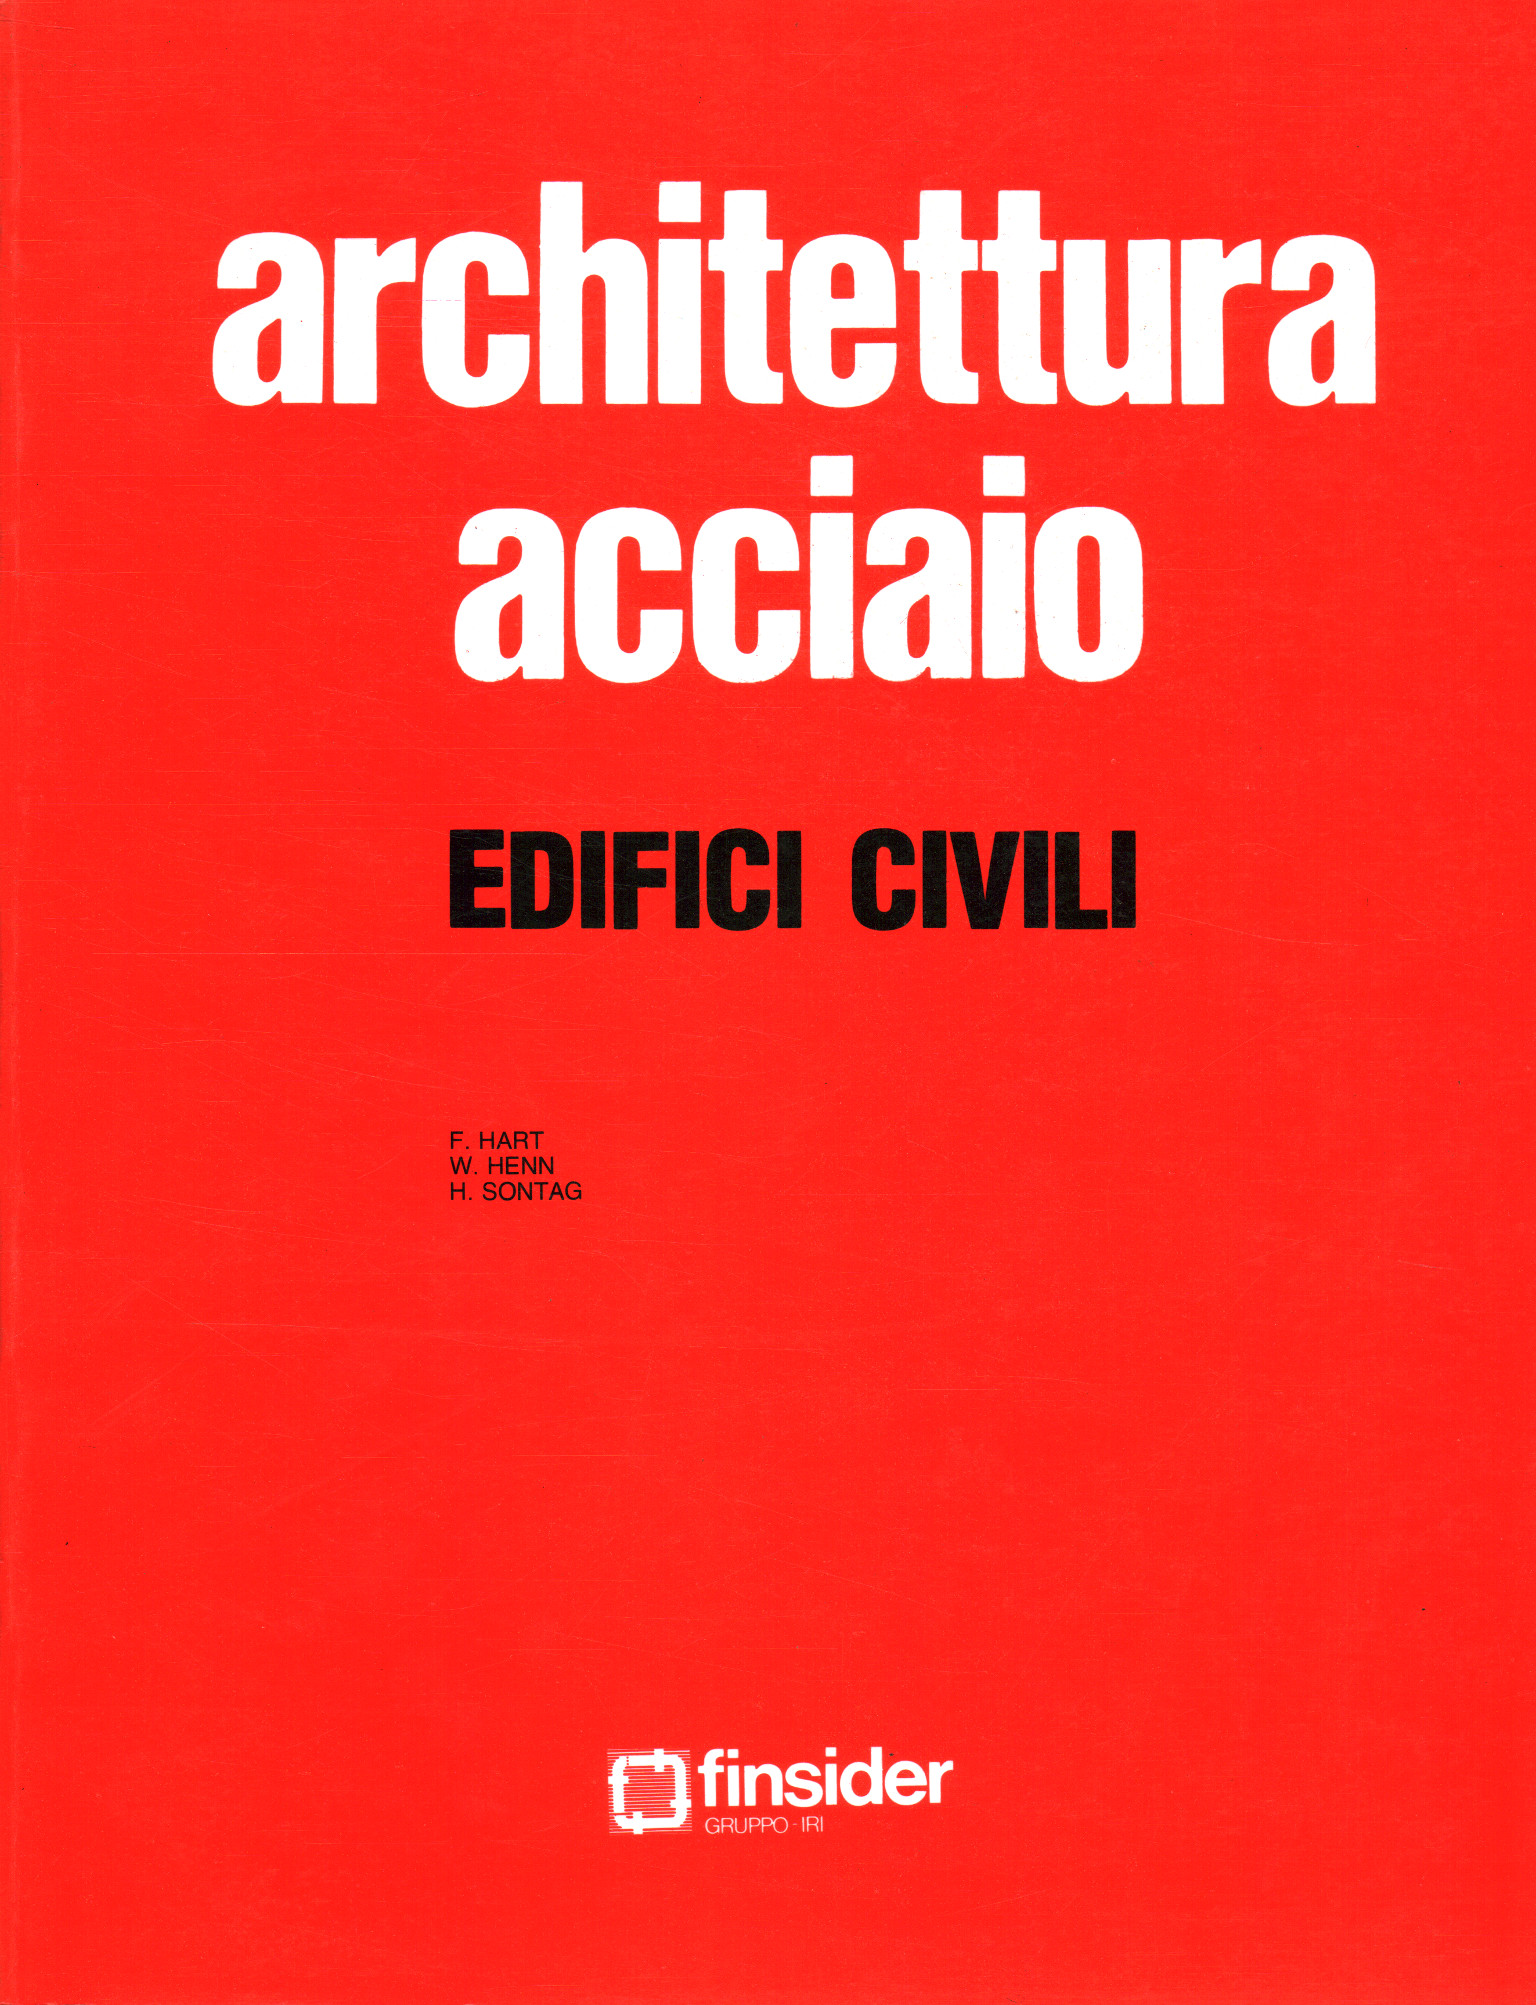 Arquitectura de acero. Edificios civiles, F. Hart W. Henn H. Sontag